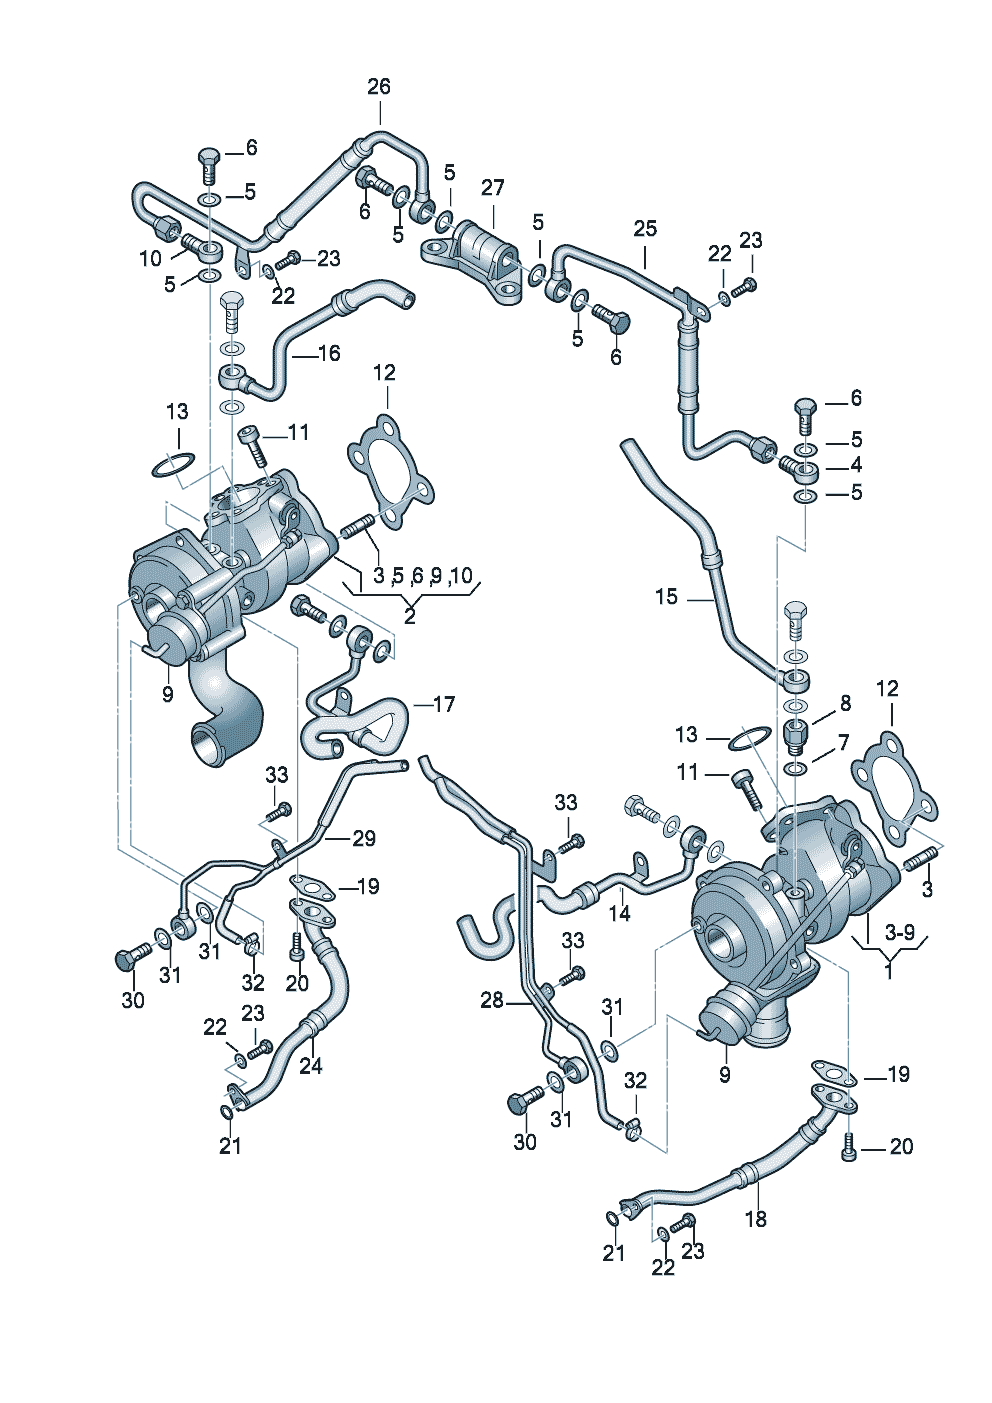 Exhaust gas turbocharger 2.7 Ltr. - Audi A6/Avant - a6